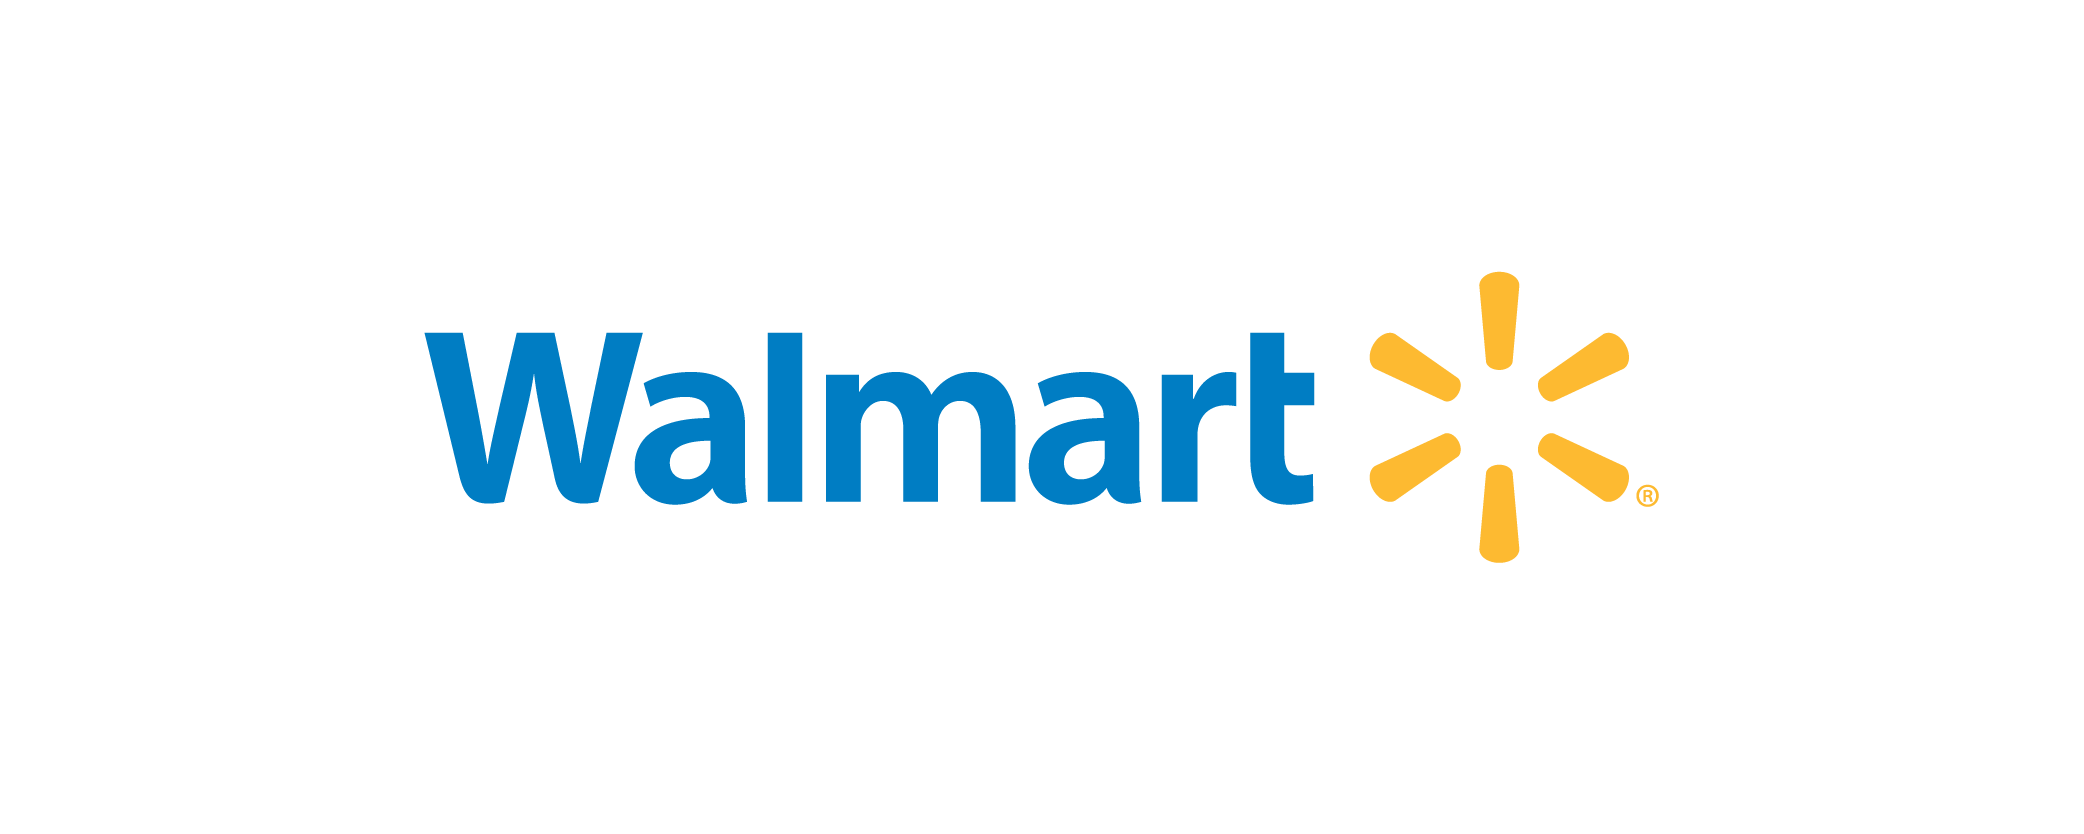 Walmart